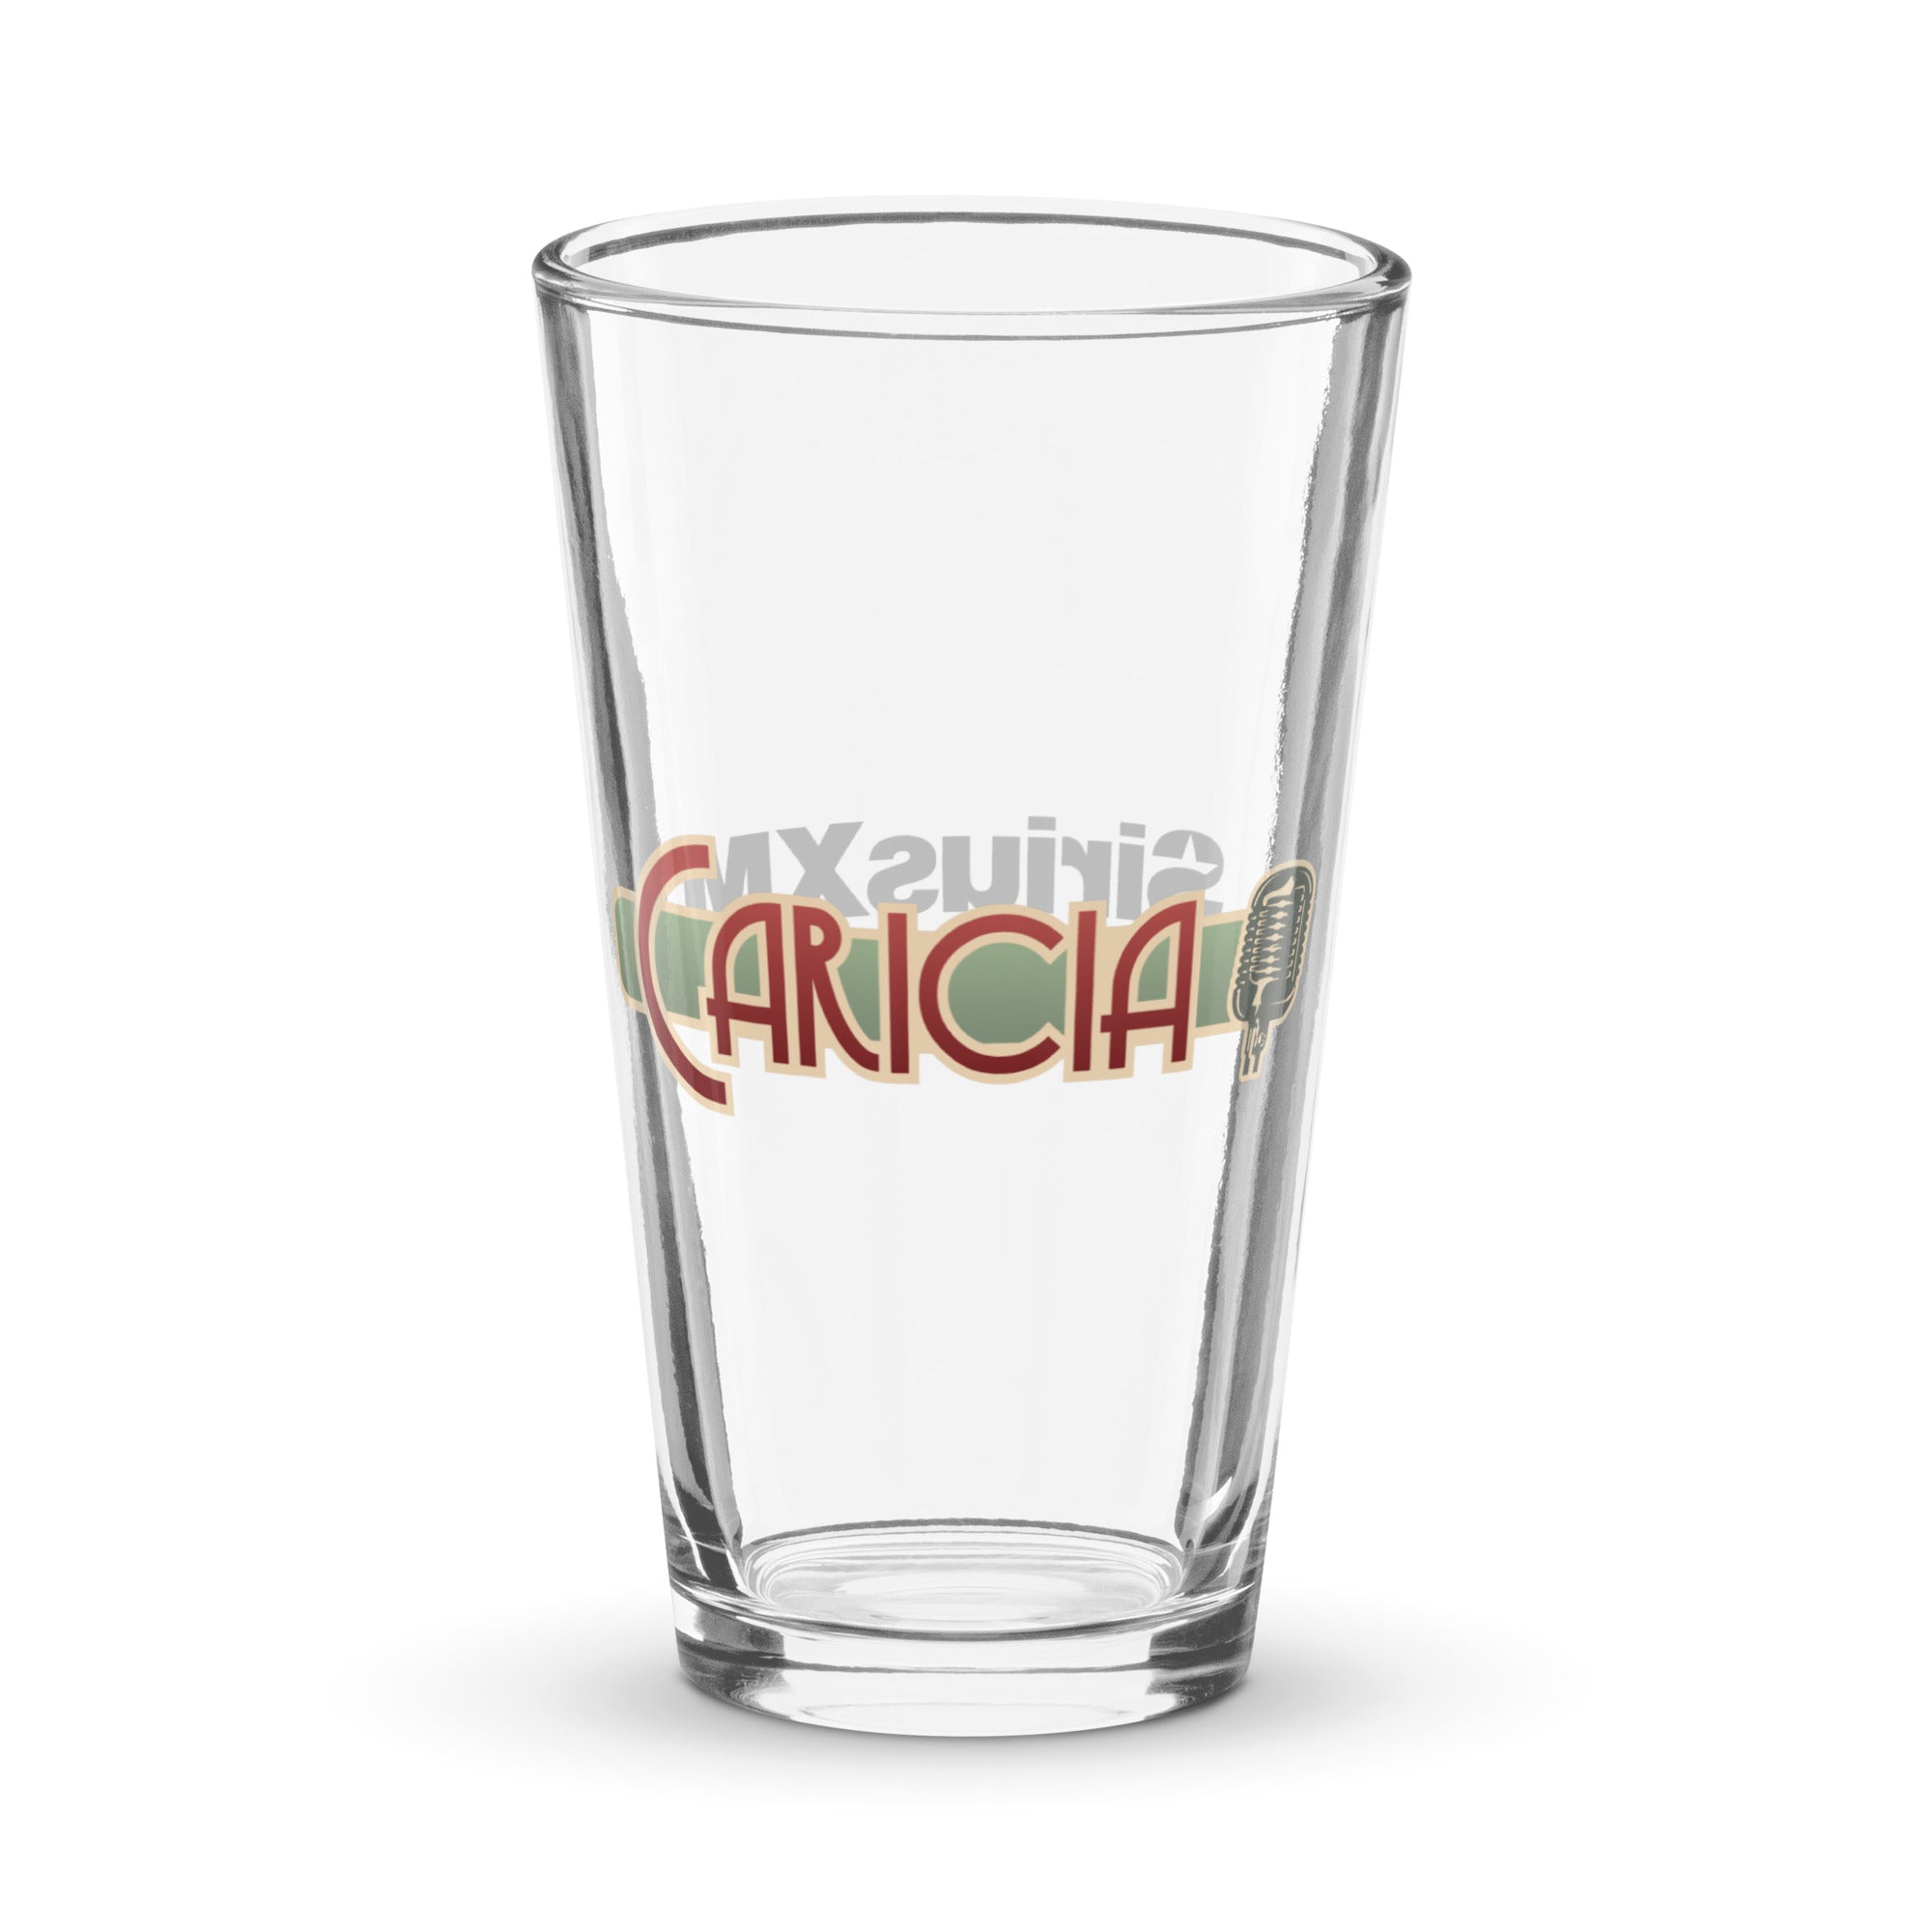 Caricia: Pint Glass